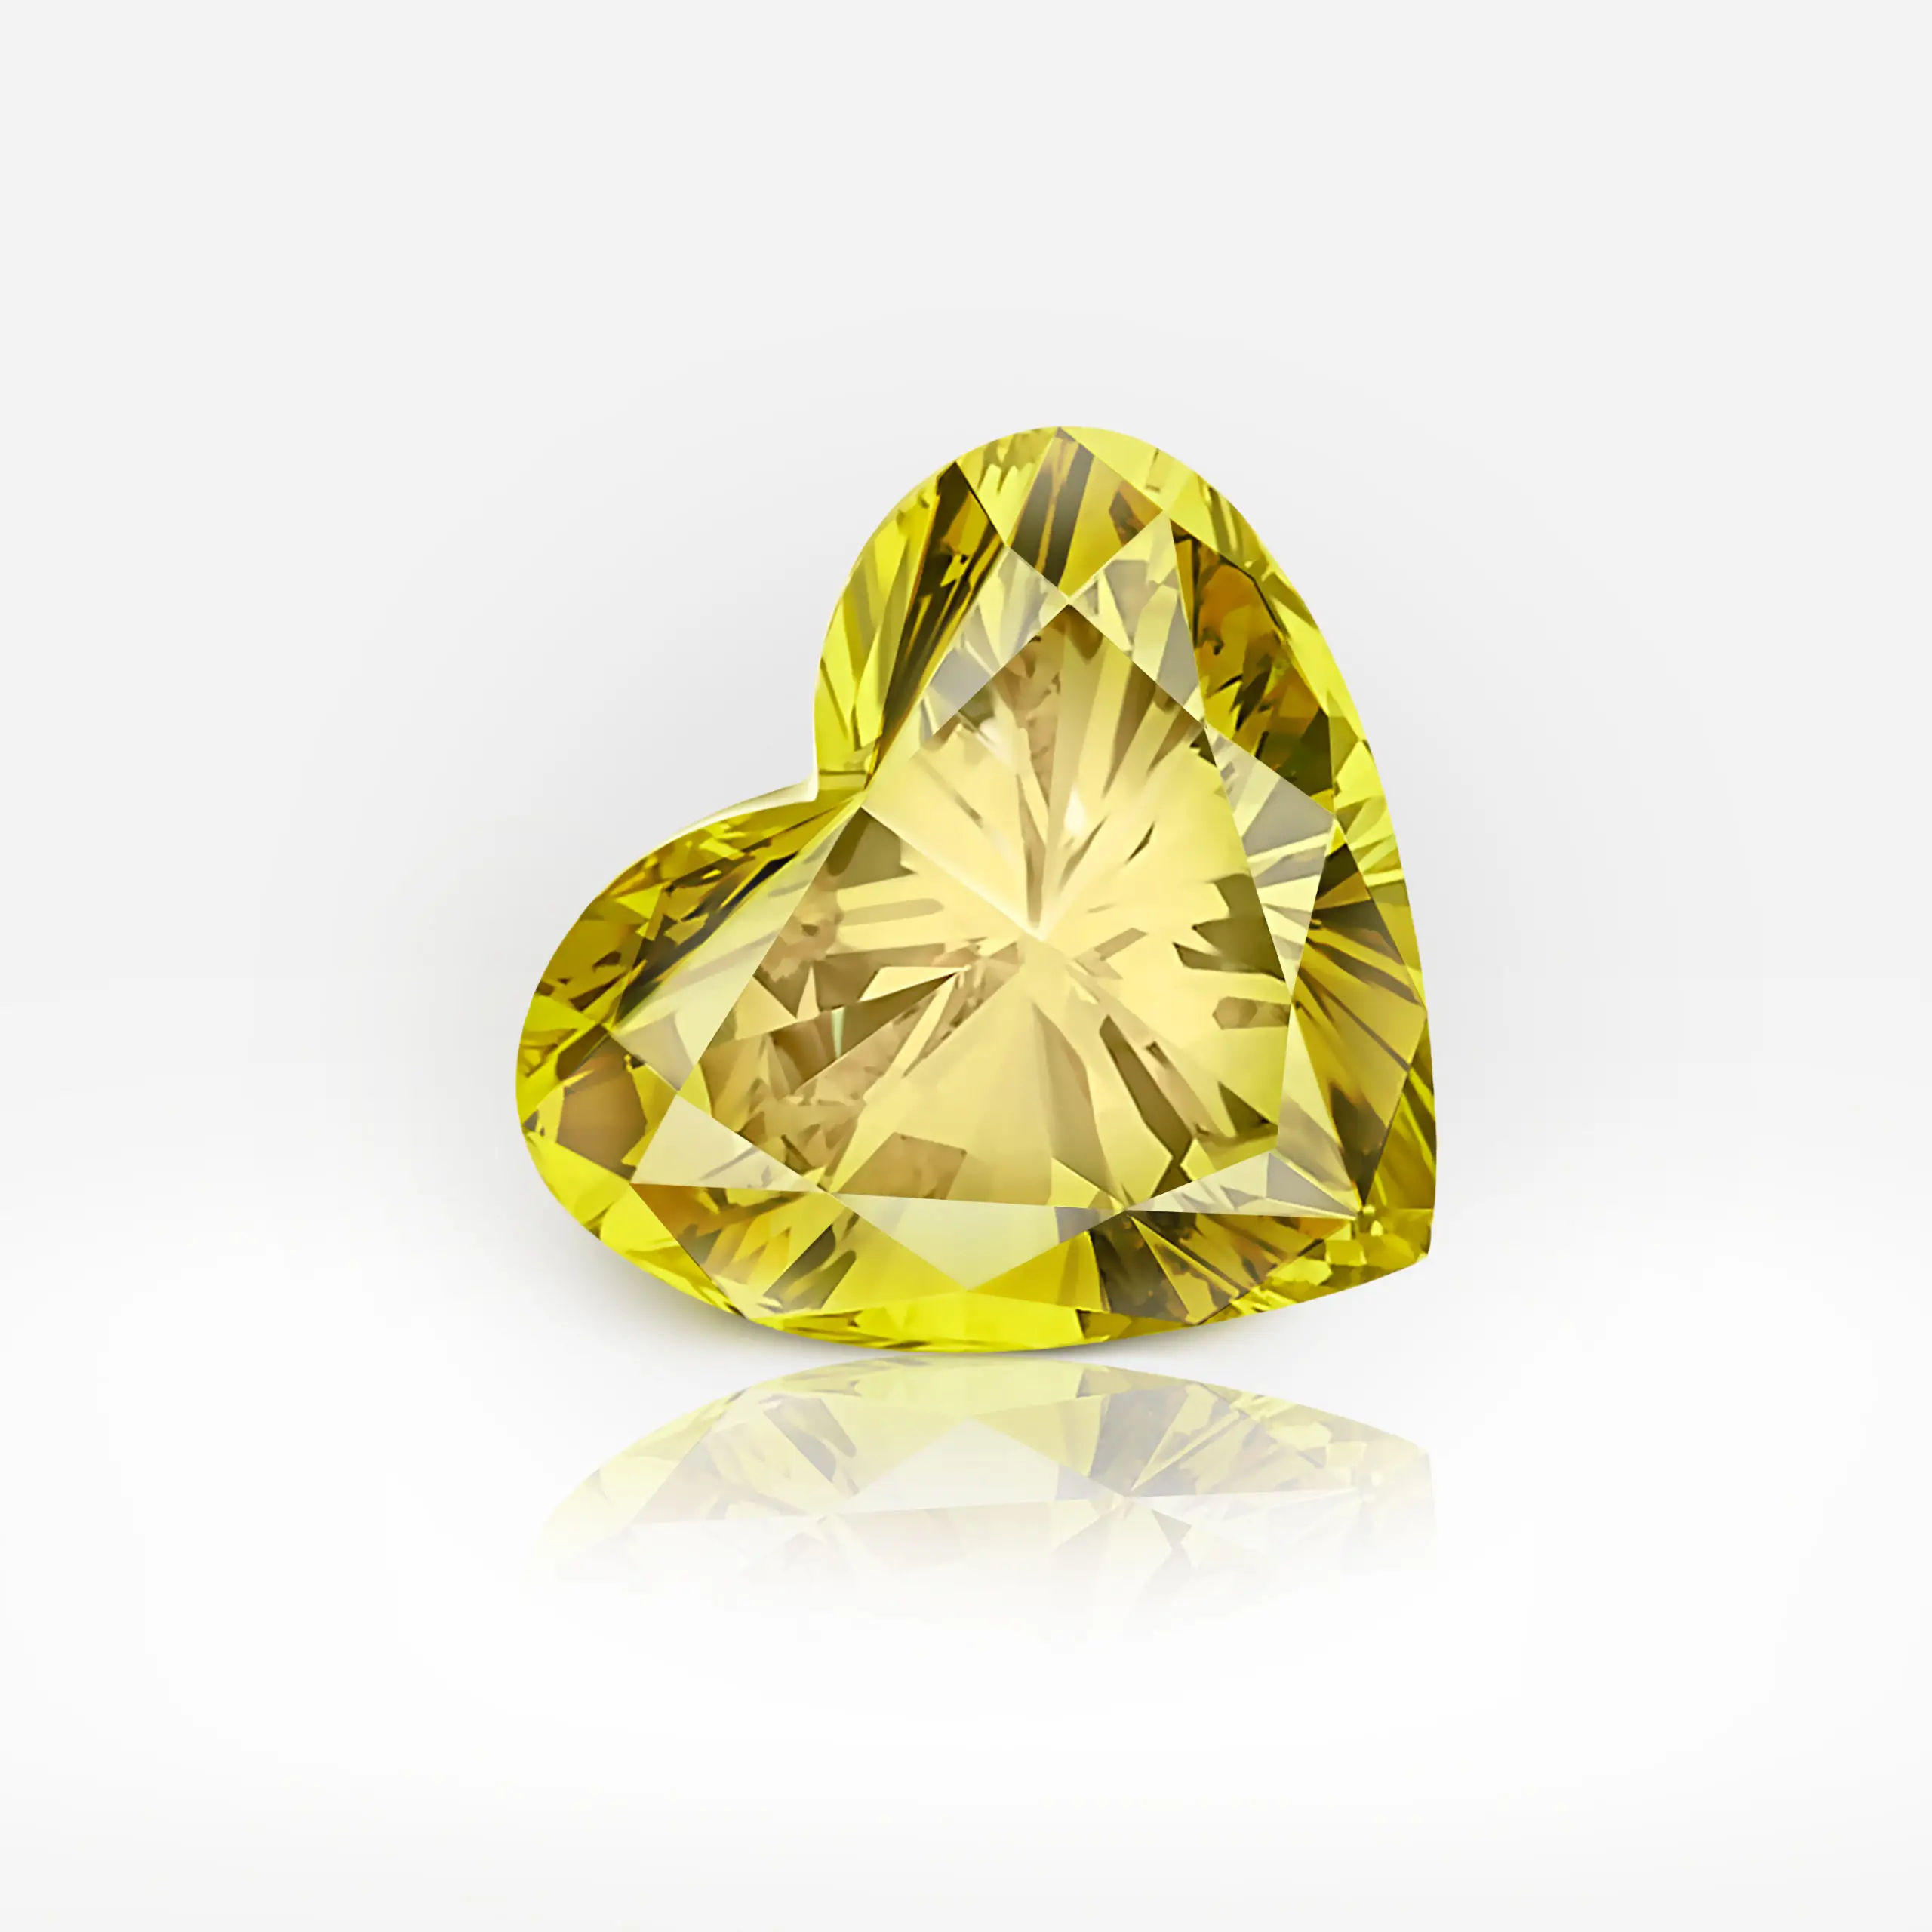 1.01 carat Fancy Deep Brown Yellow I2 Heart Shape Diamond GIA - picture 1